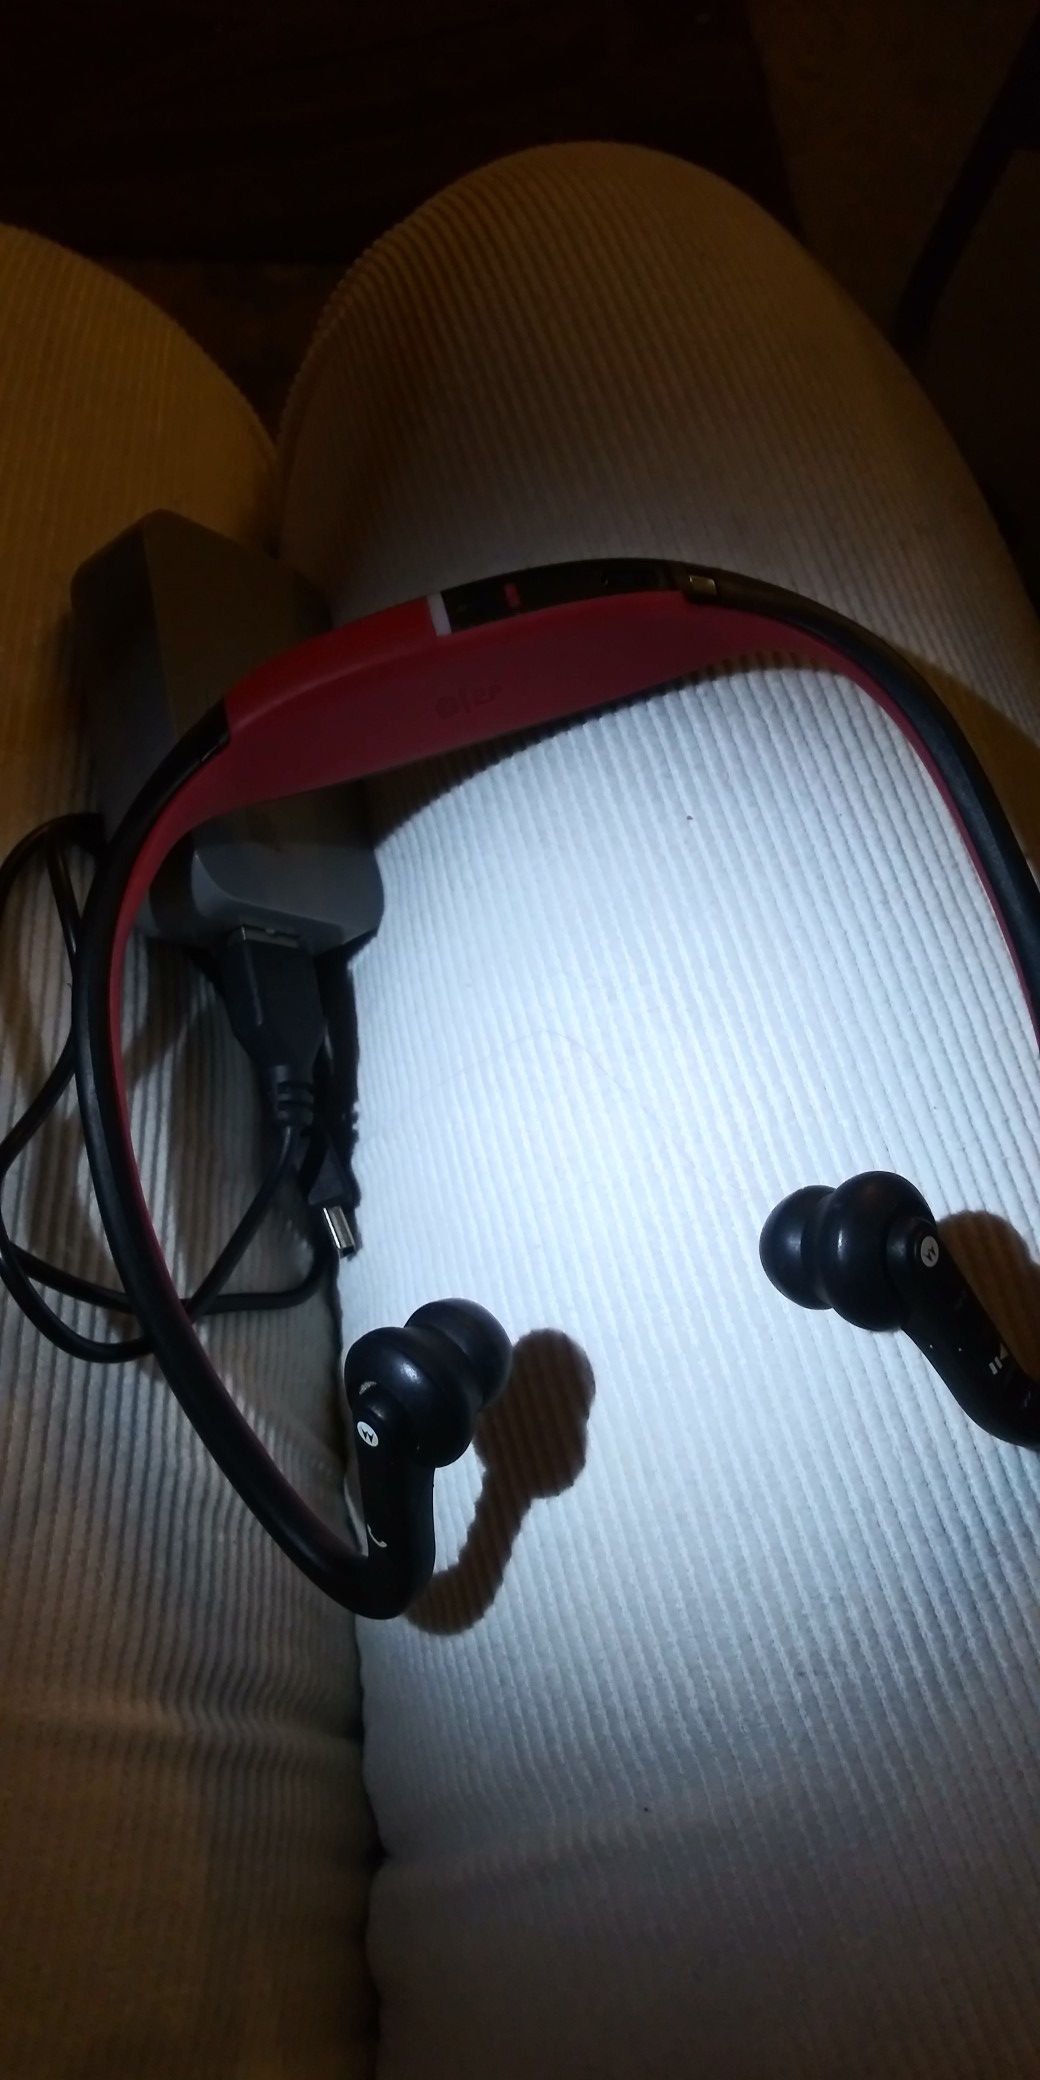 Motorola Bluetooth headphones